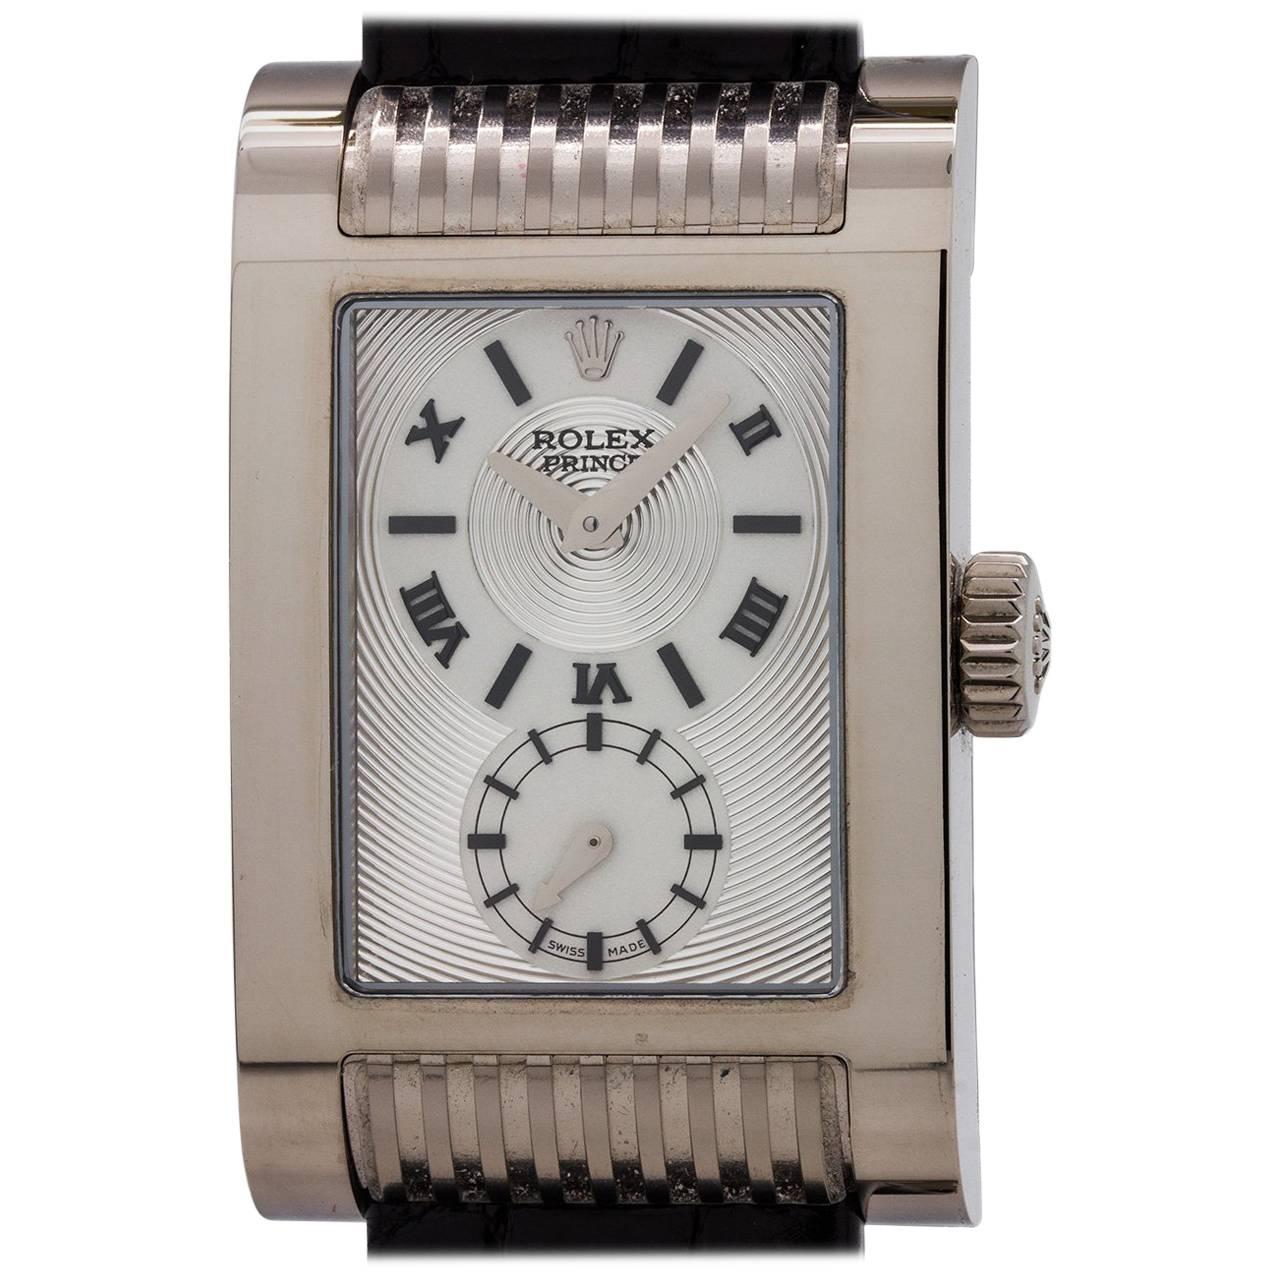 Rolex White Gold Cellini Prince Manual Wind Wristwatch Ref 5441/9, circa 2010 For Sale